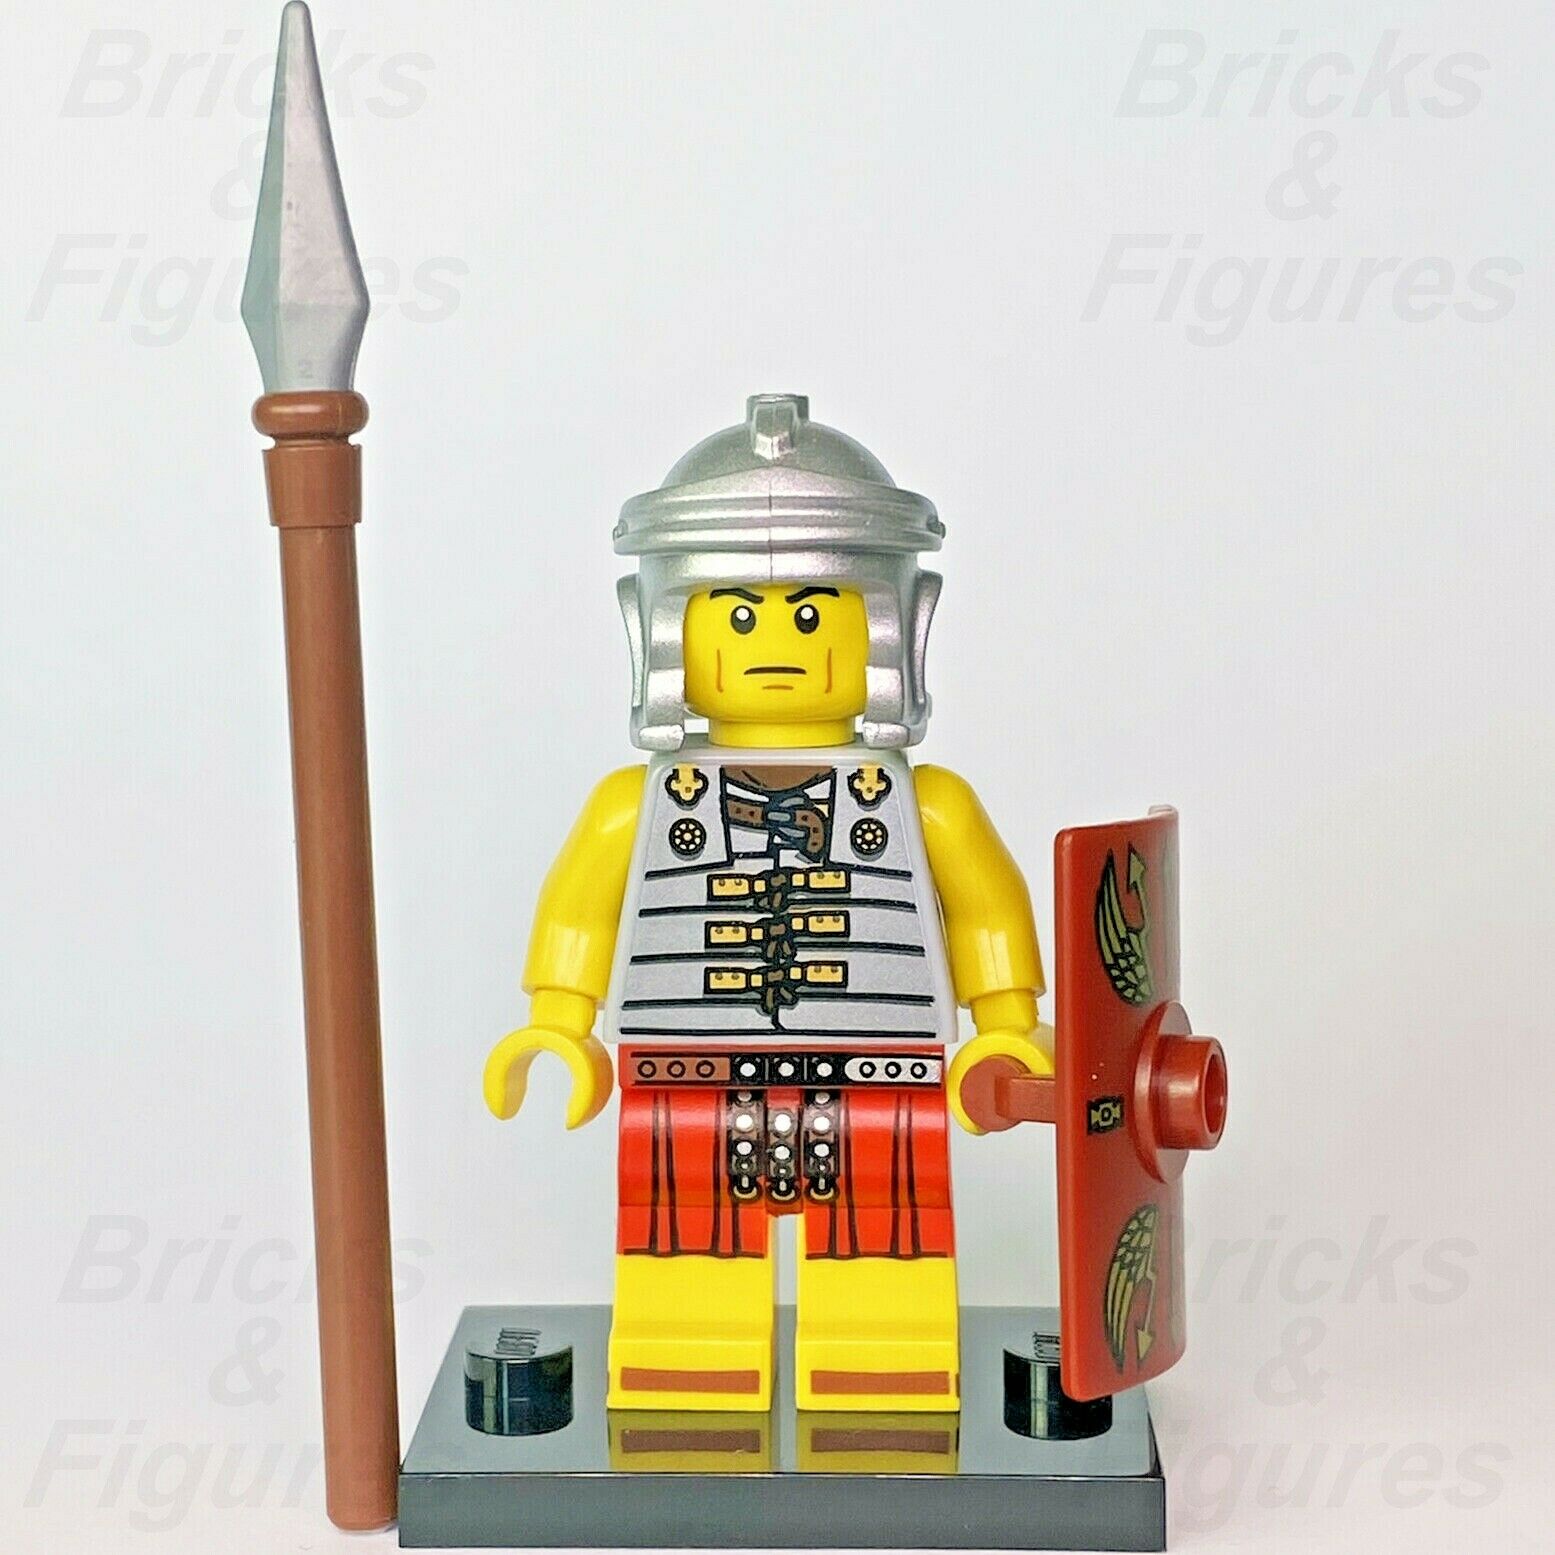 New Collectible Minifigures LEGO Roman Soldier Warrior Series 6 Minifig 8827 - Bricks & Figures